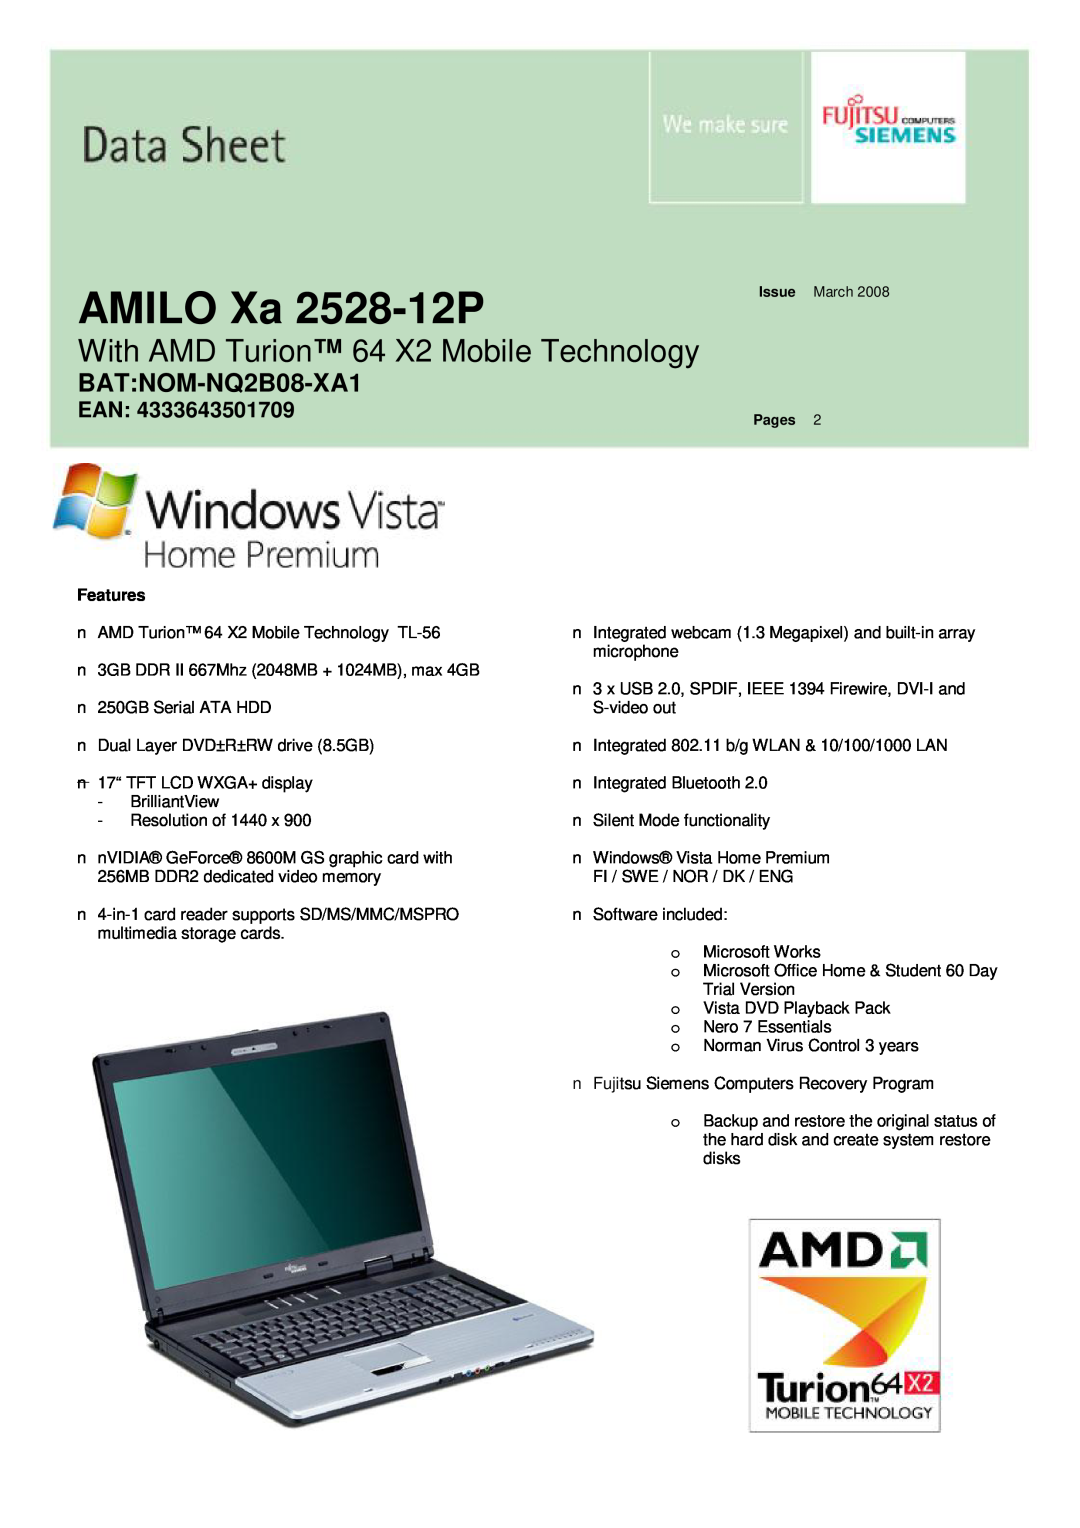 Fujitsu Siemens Computers manual AMILO Xa 2528-12P, With AMD Turion 64 X2 Mobile Technology, BATNOM-NQ2B08-XA1 